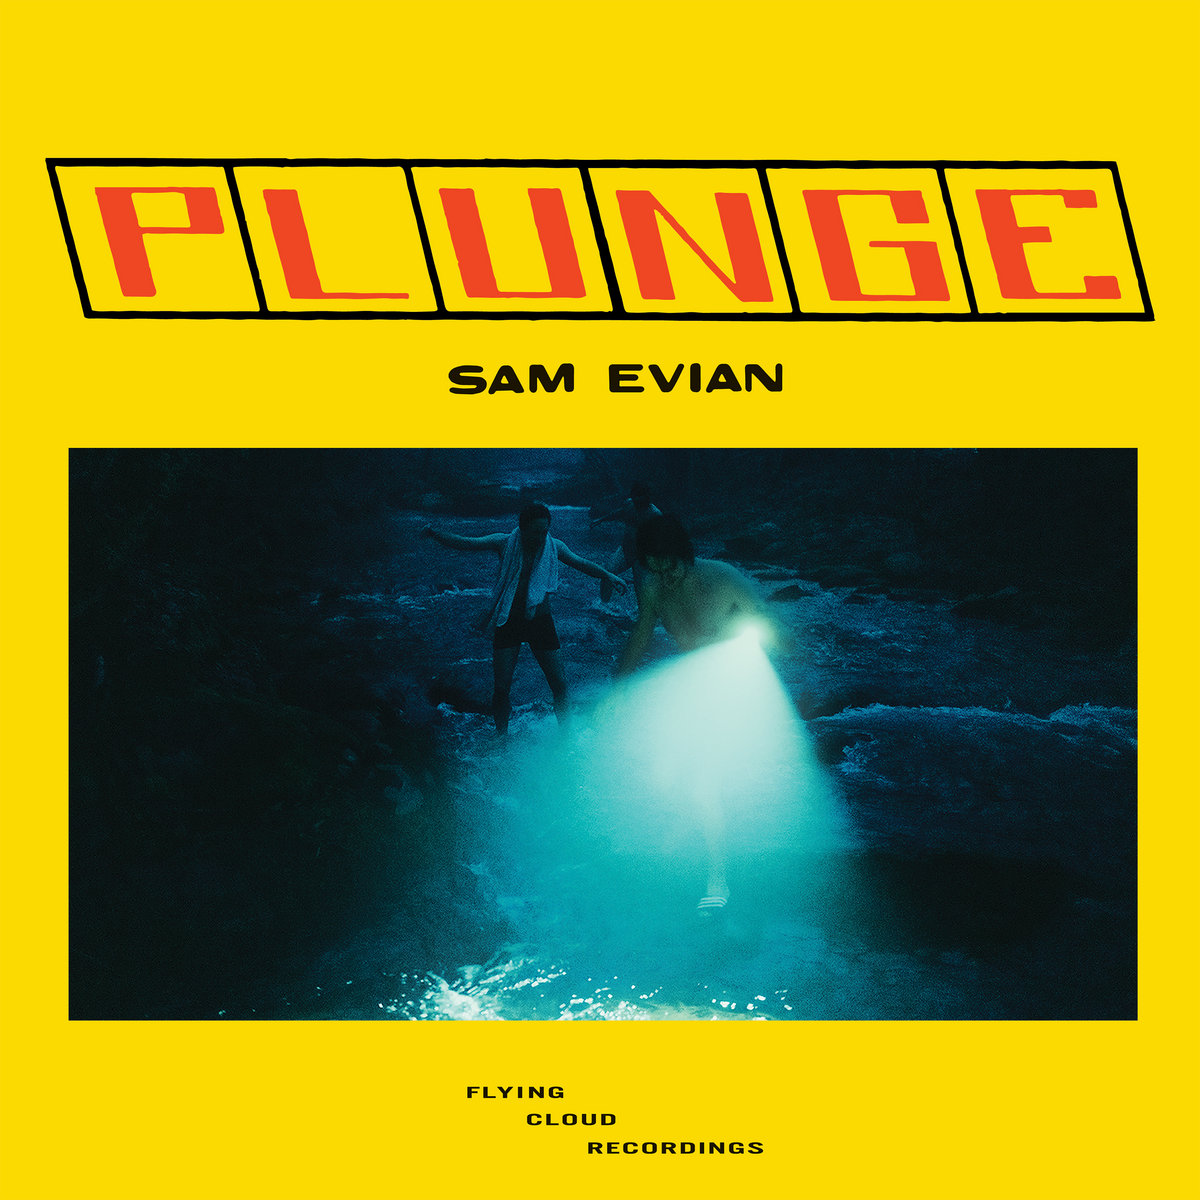 Sam Evian – Plunge